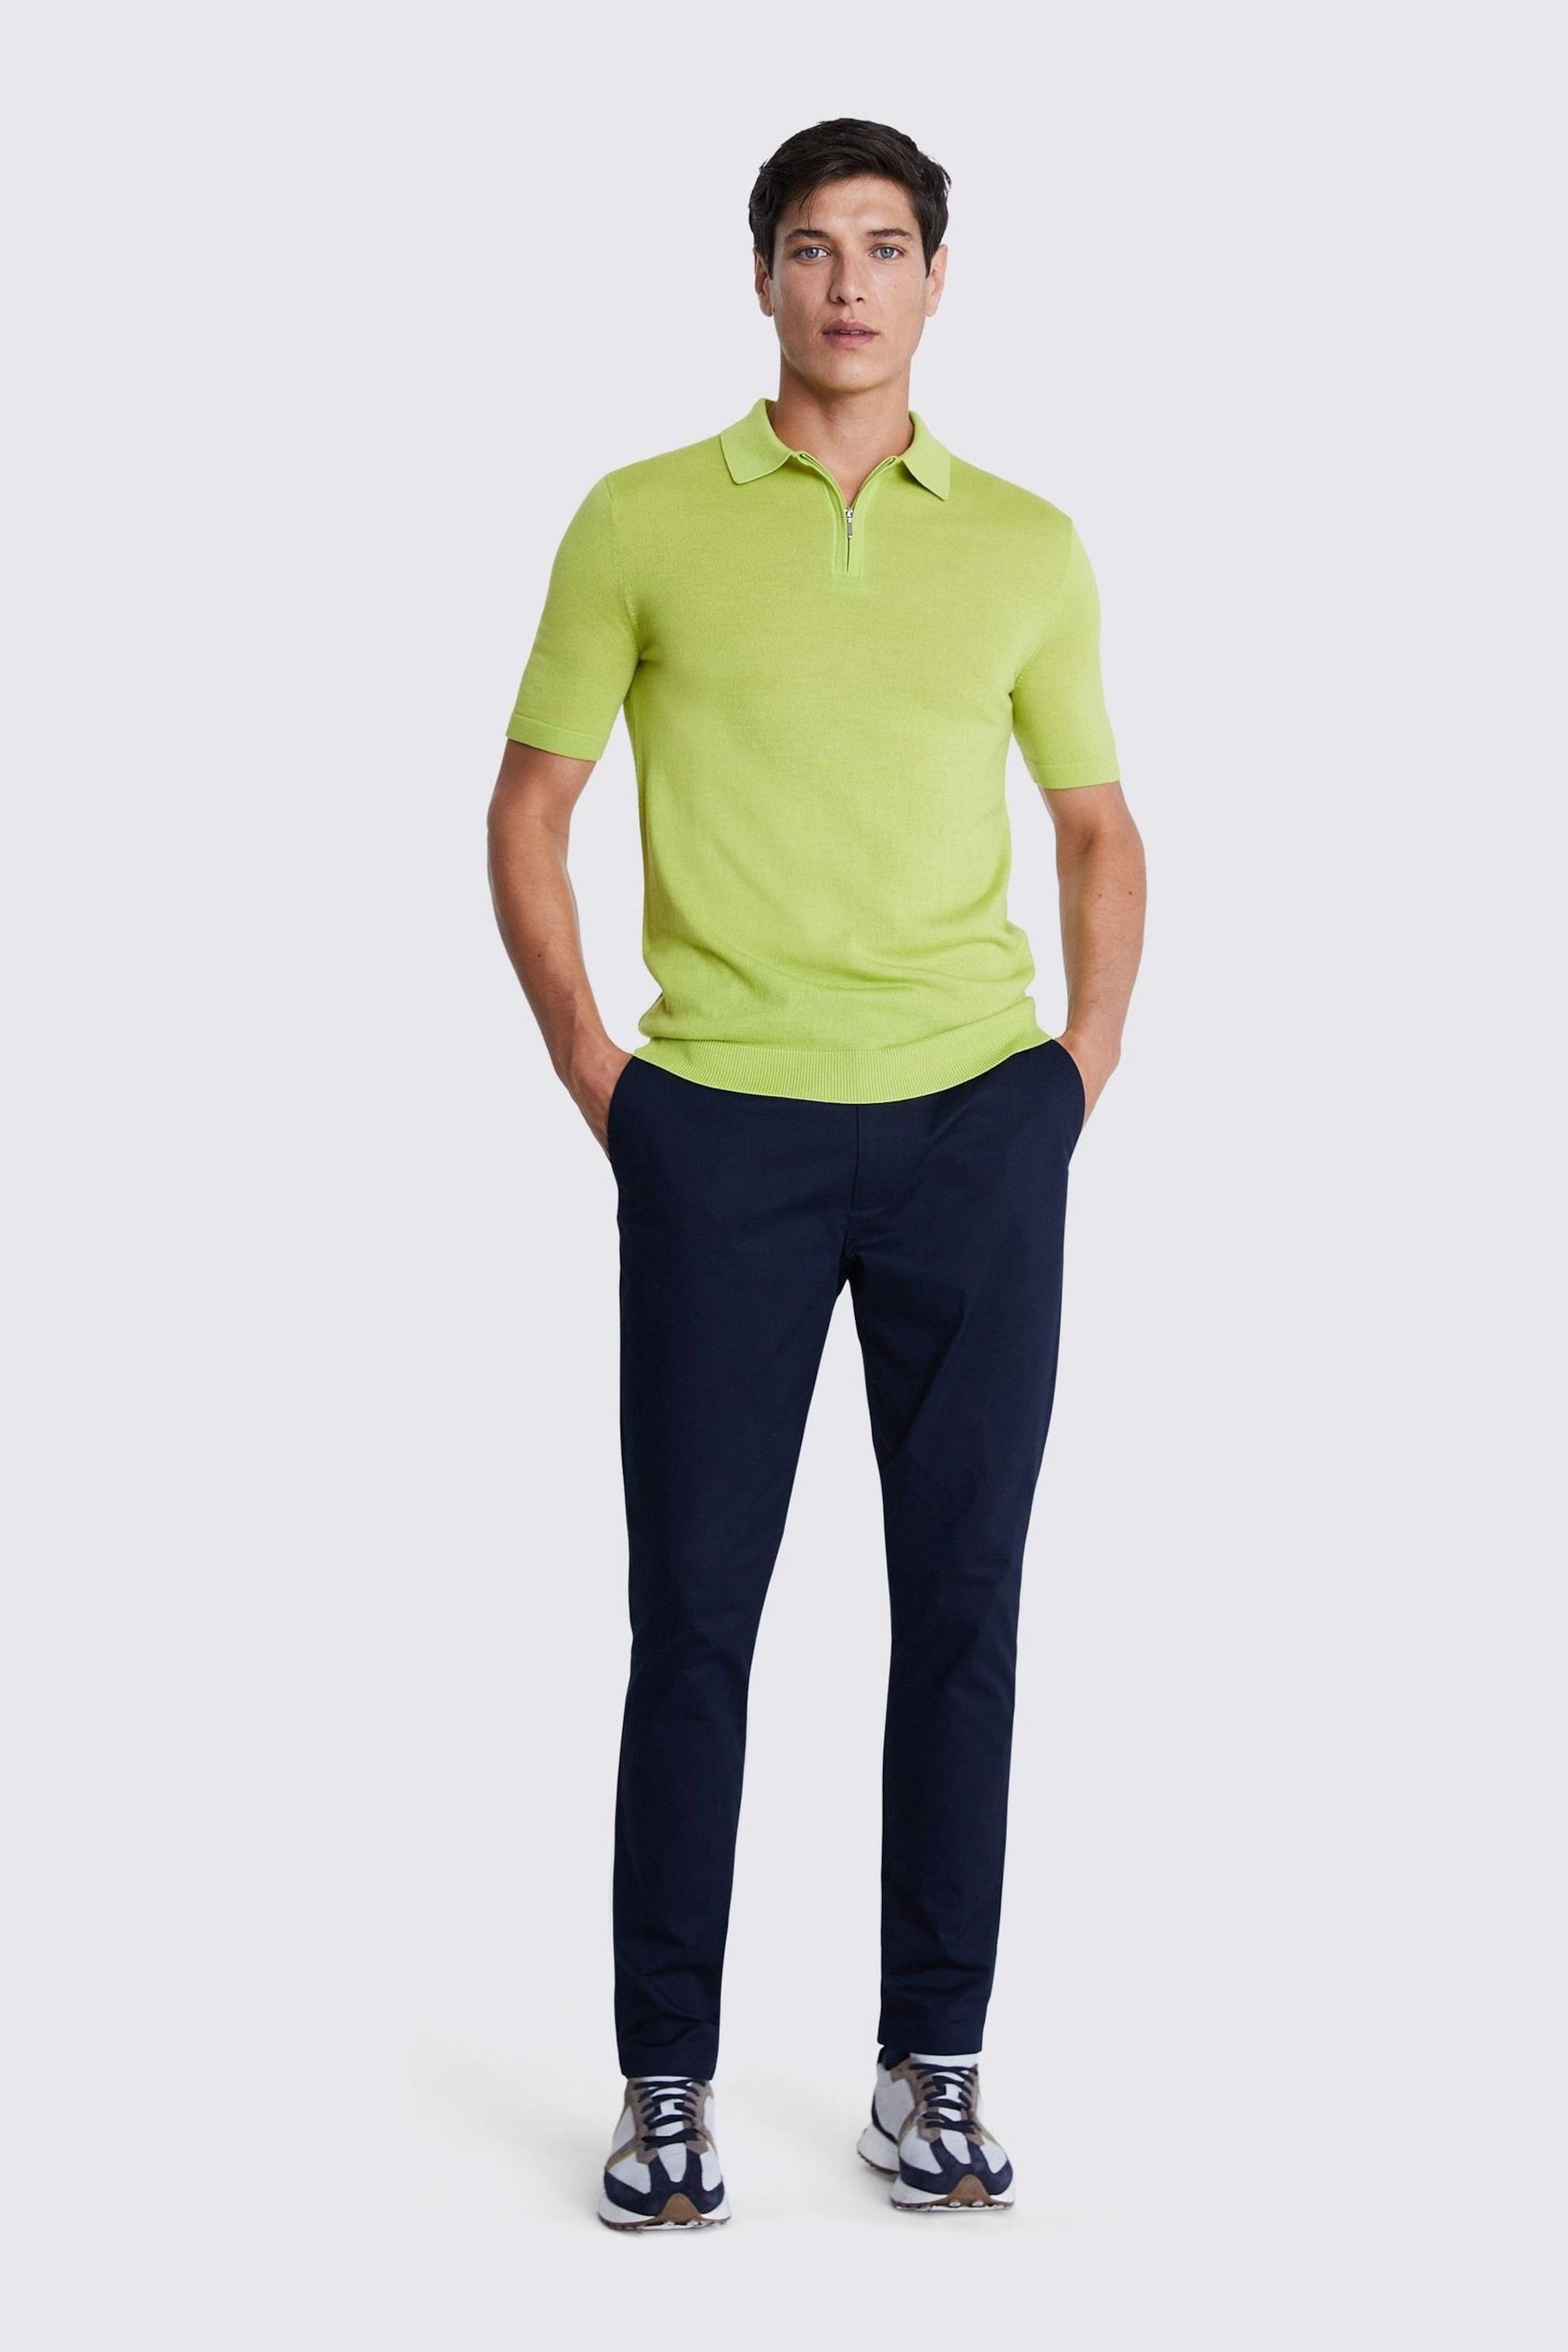 MOSS Green Merino Quarter Zip Polo Shirt - Image 2 of 3